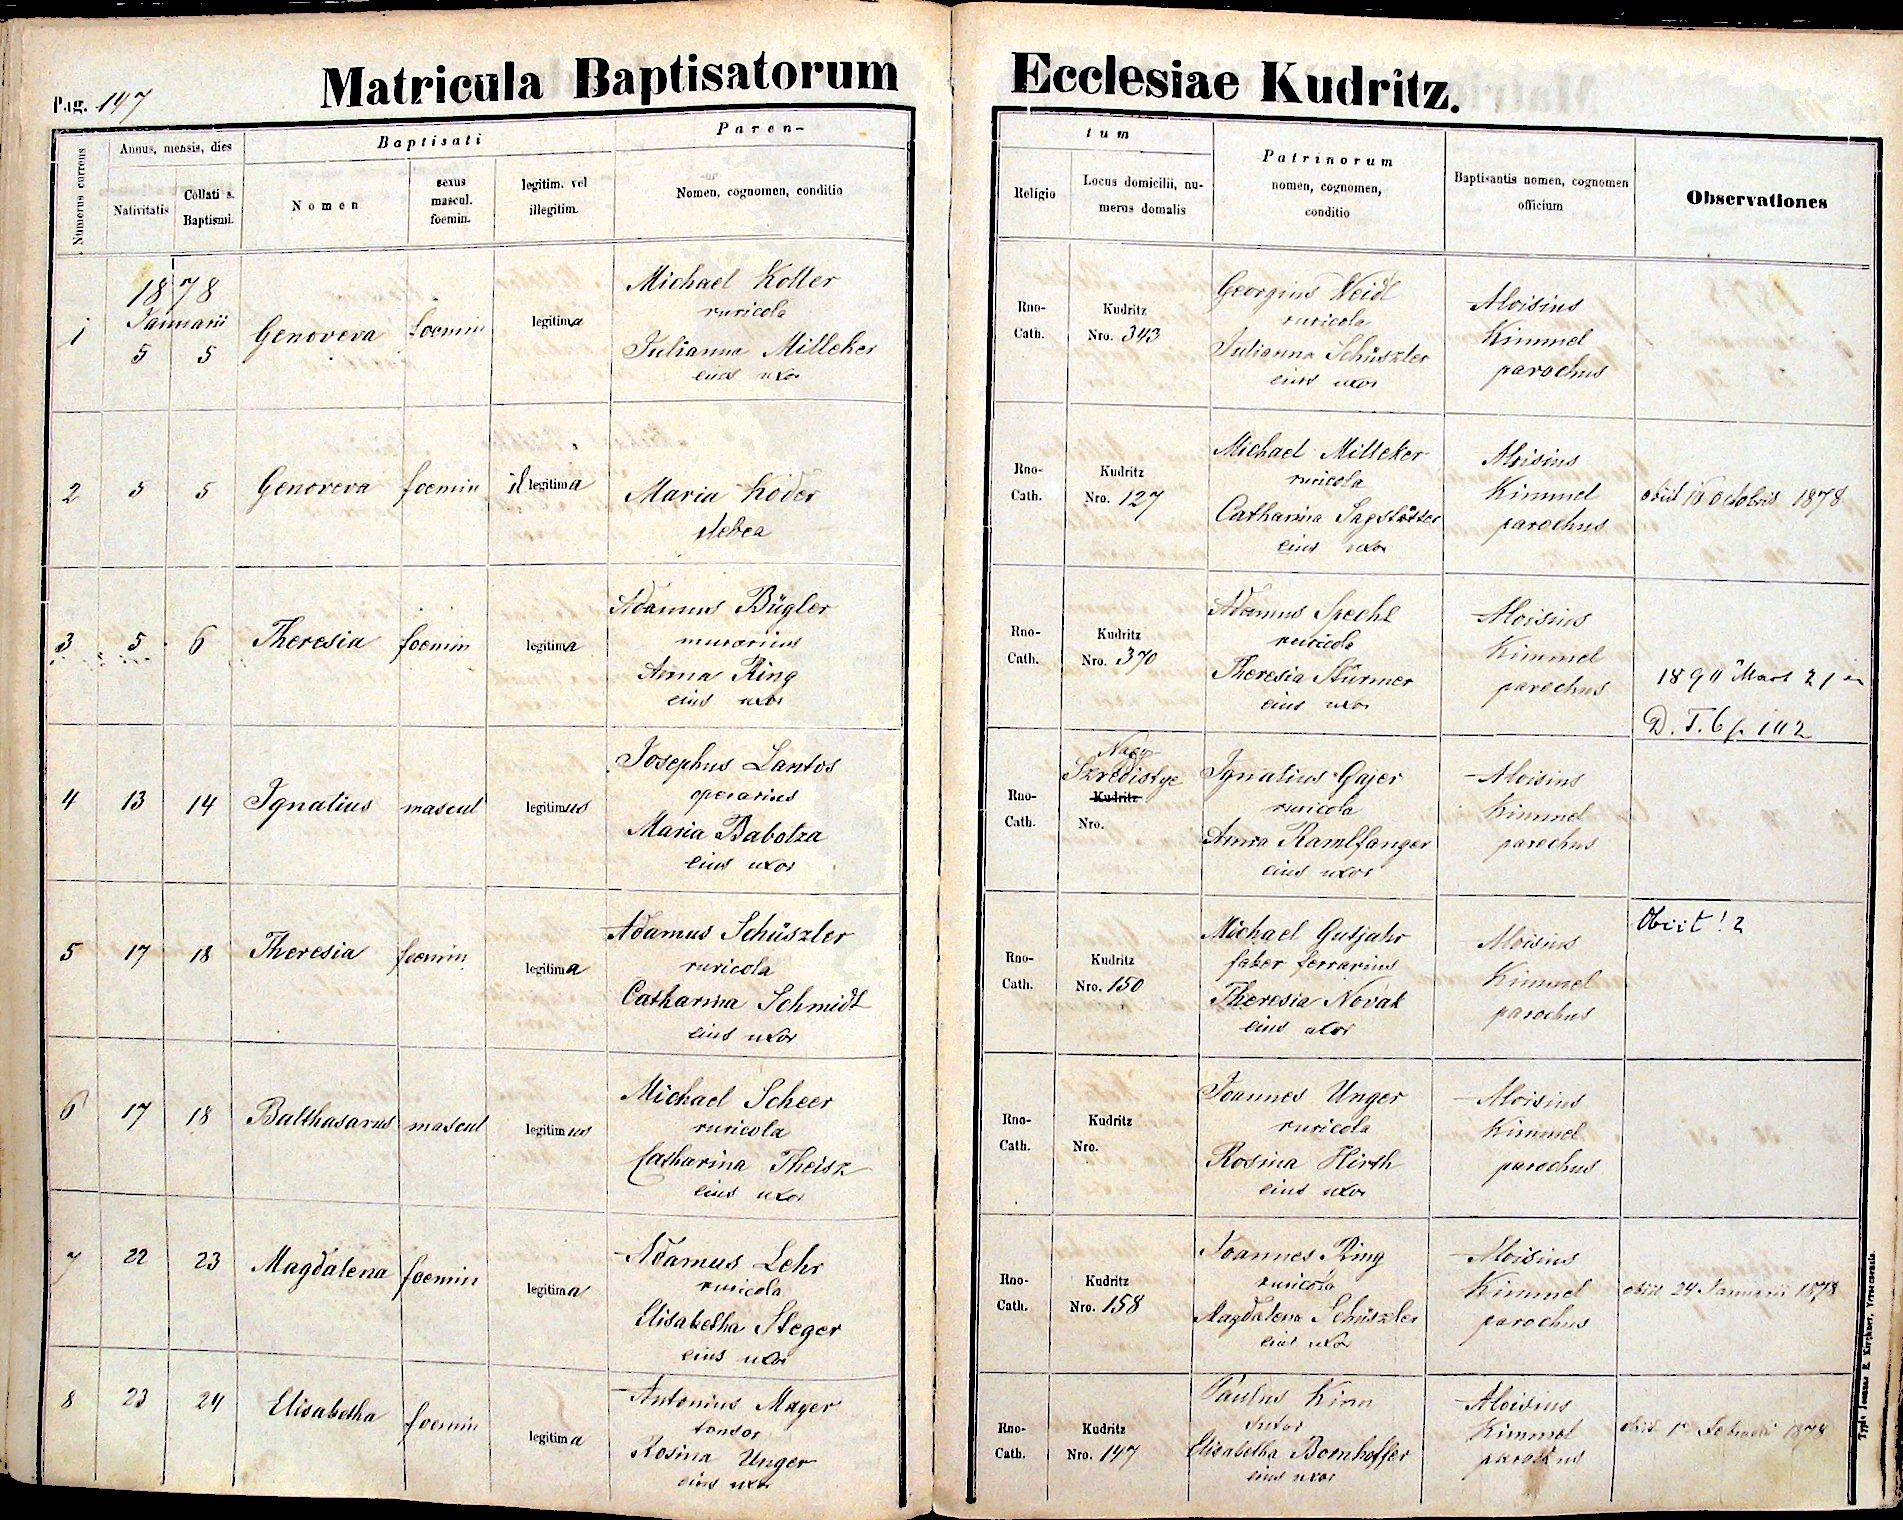 images/church_records/BIRTHS/1884-1899B/1893/147